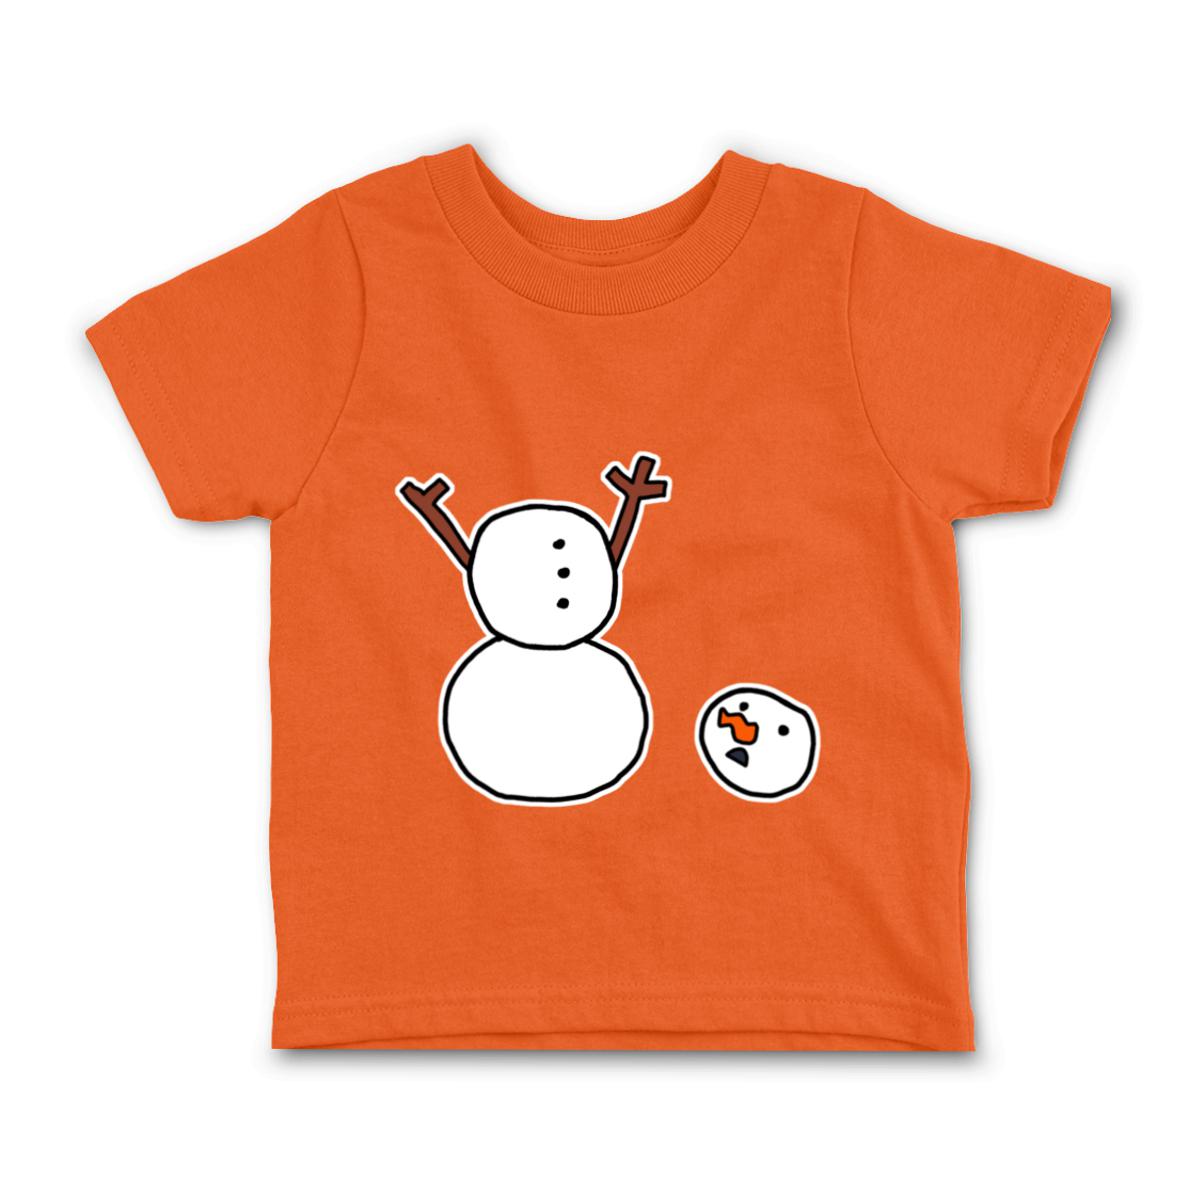 Headless Snowman Toddler Tee 2T orange